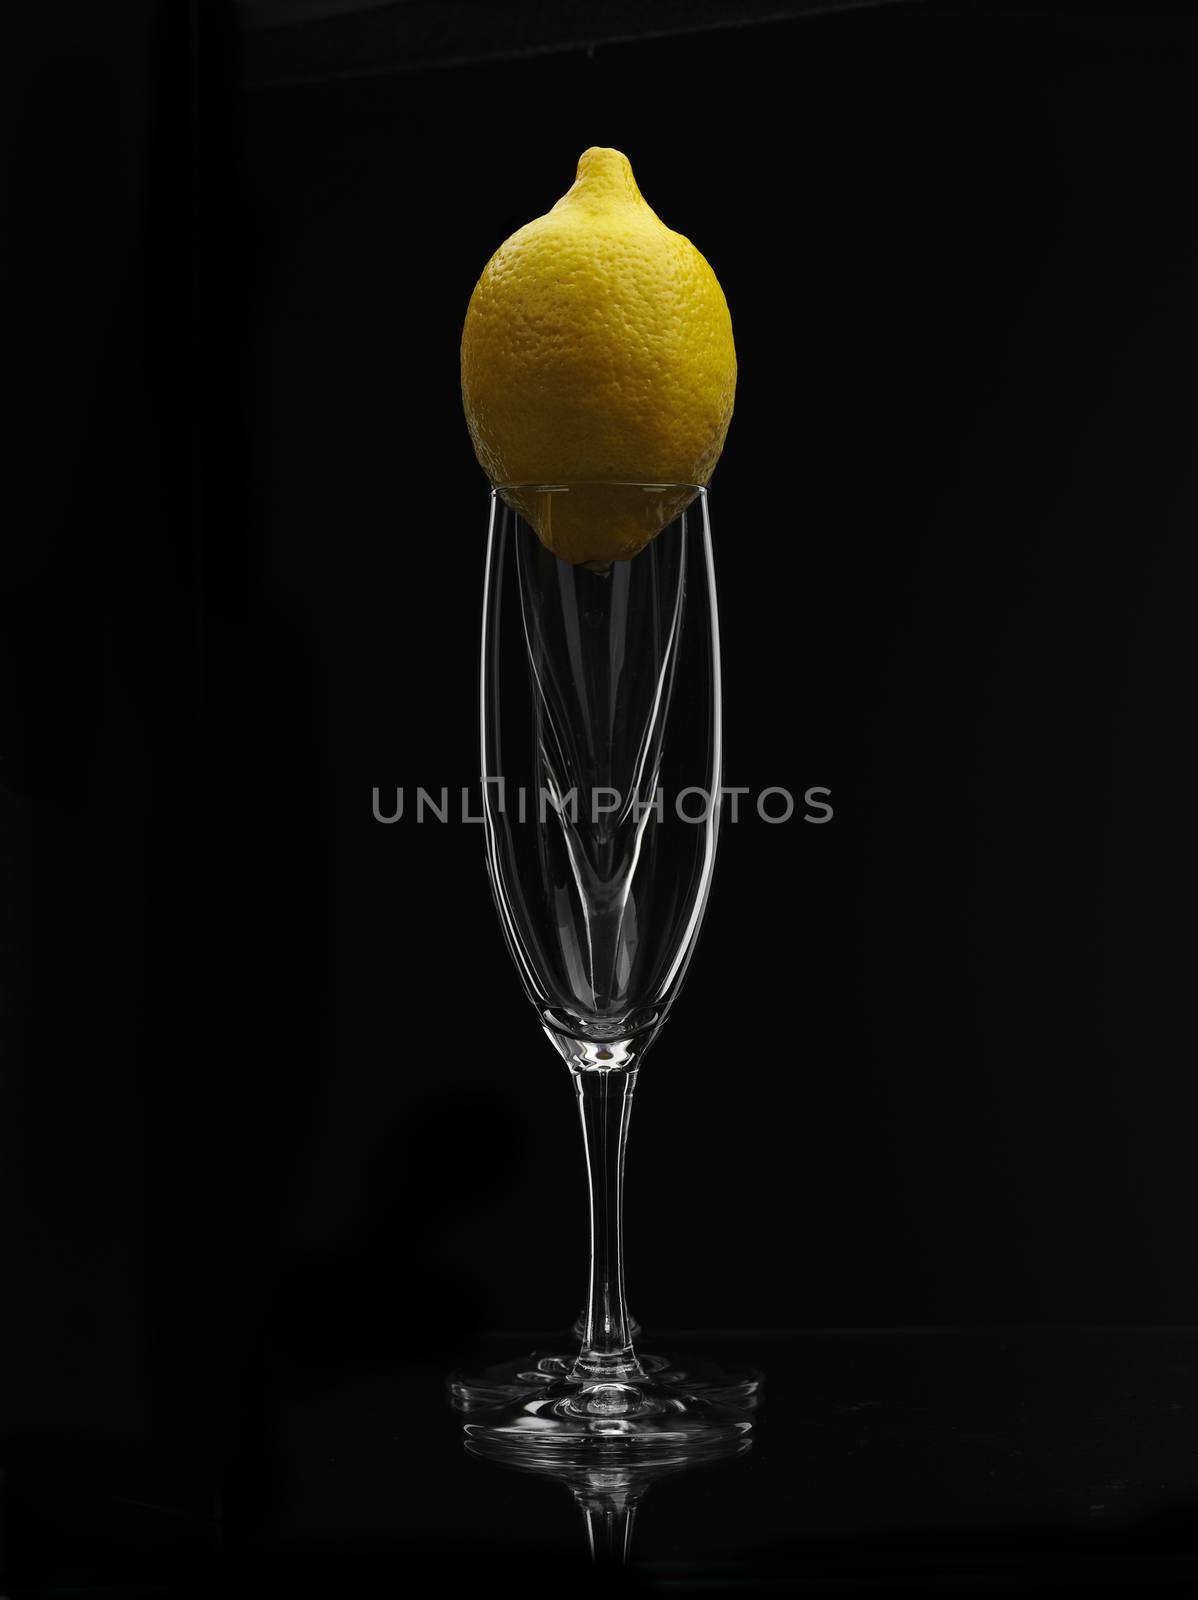 Lemon by agg